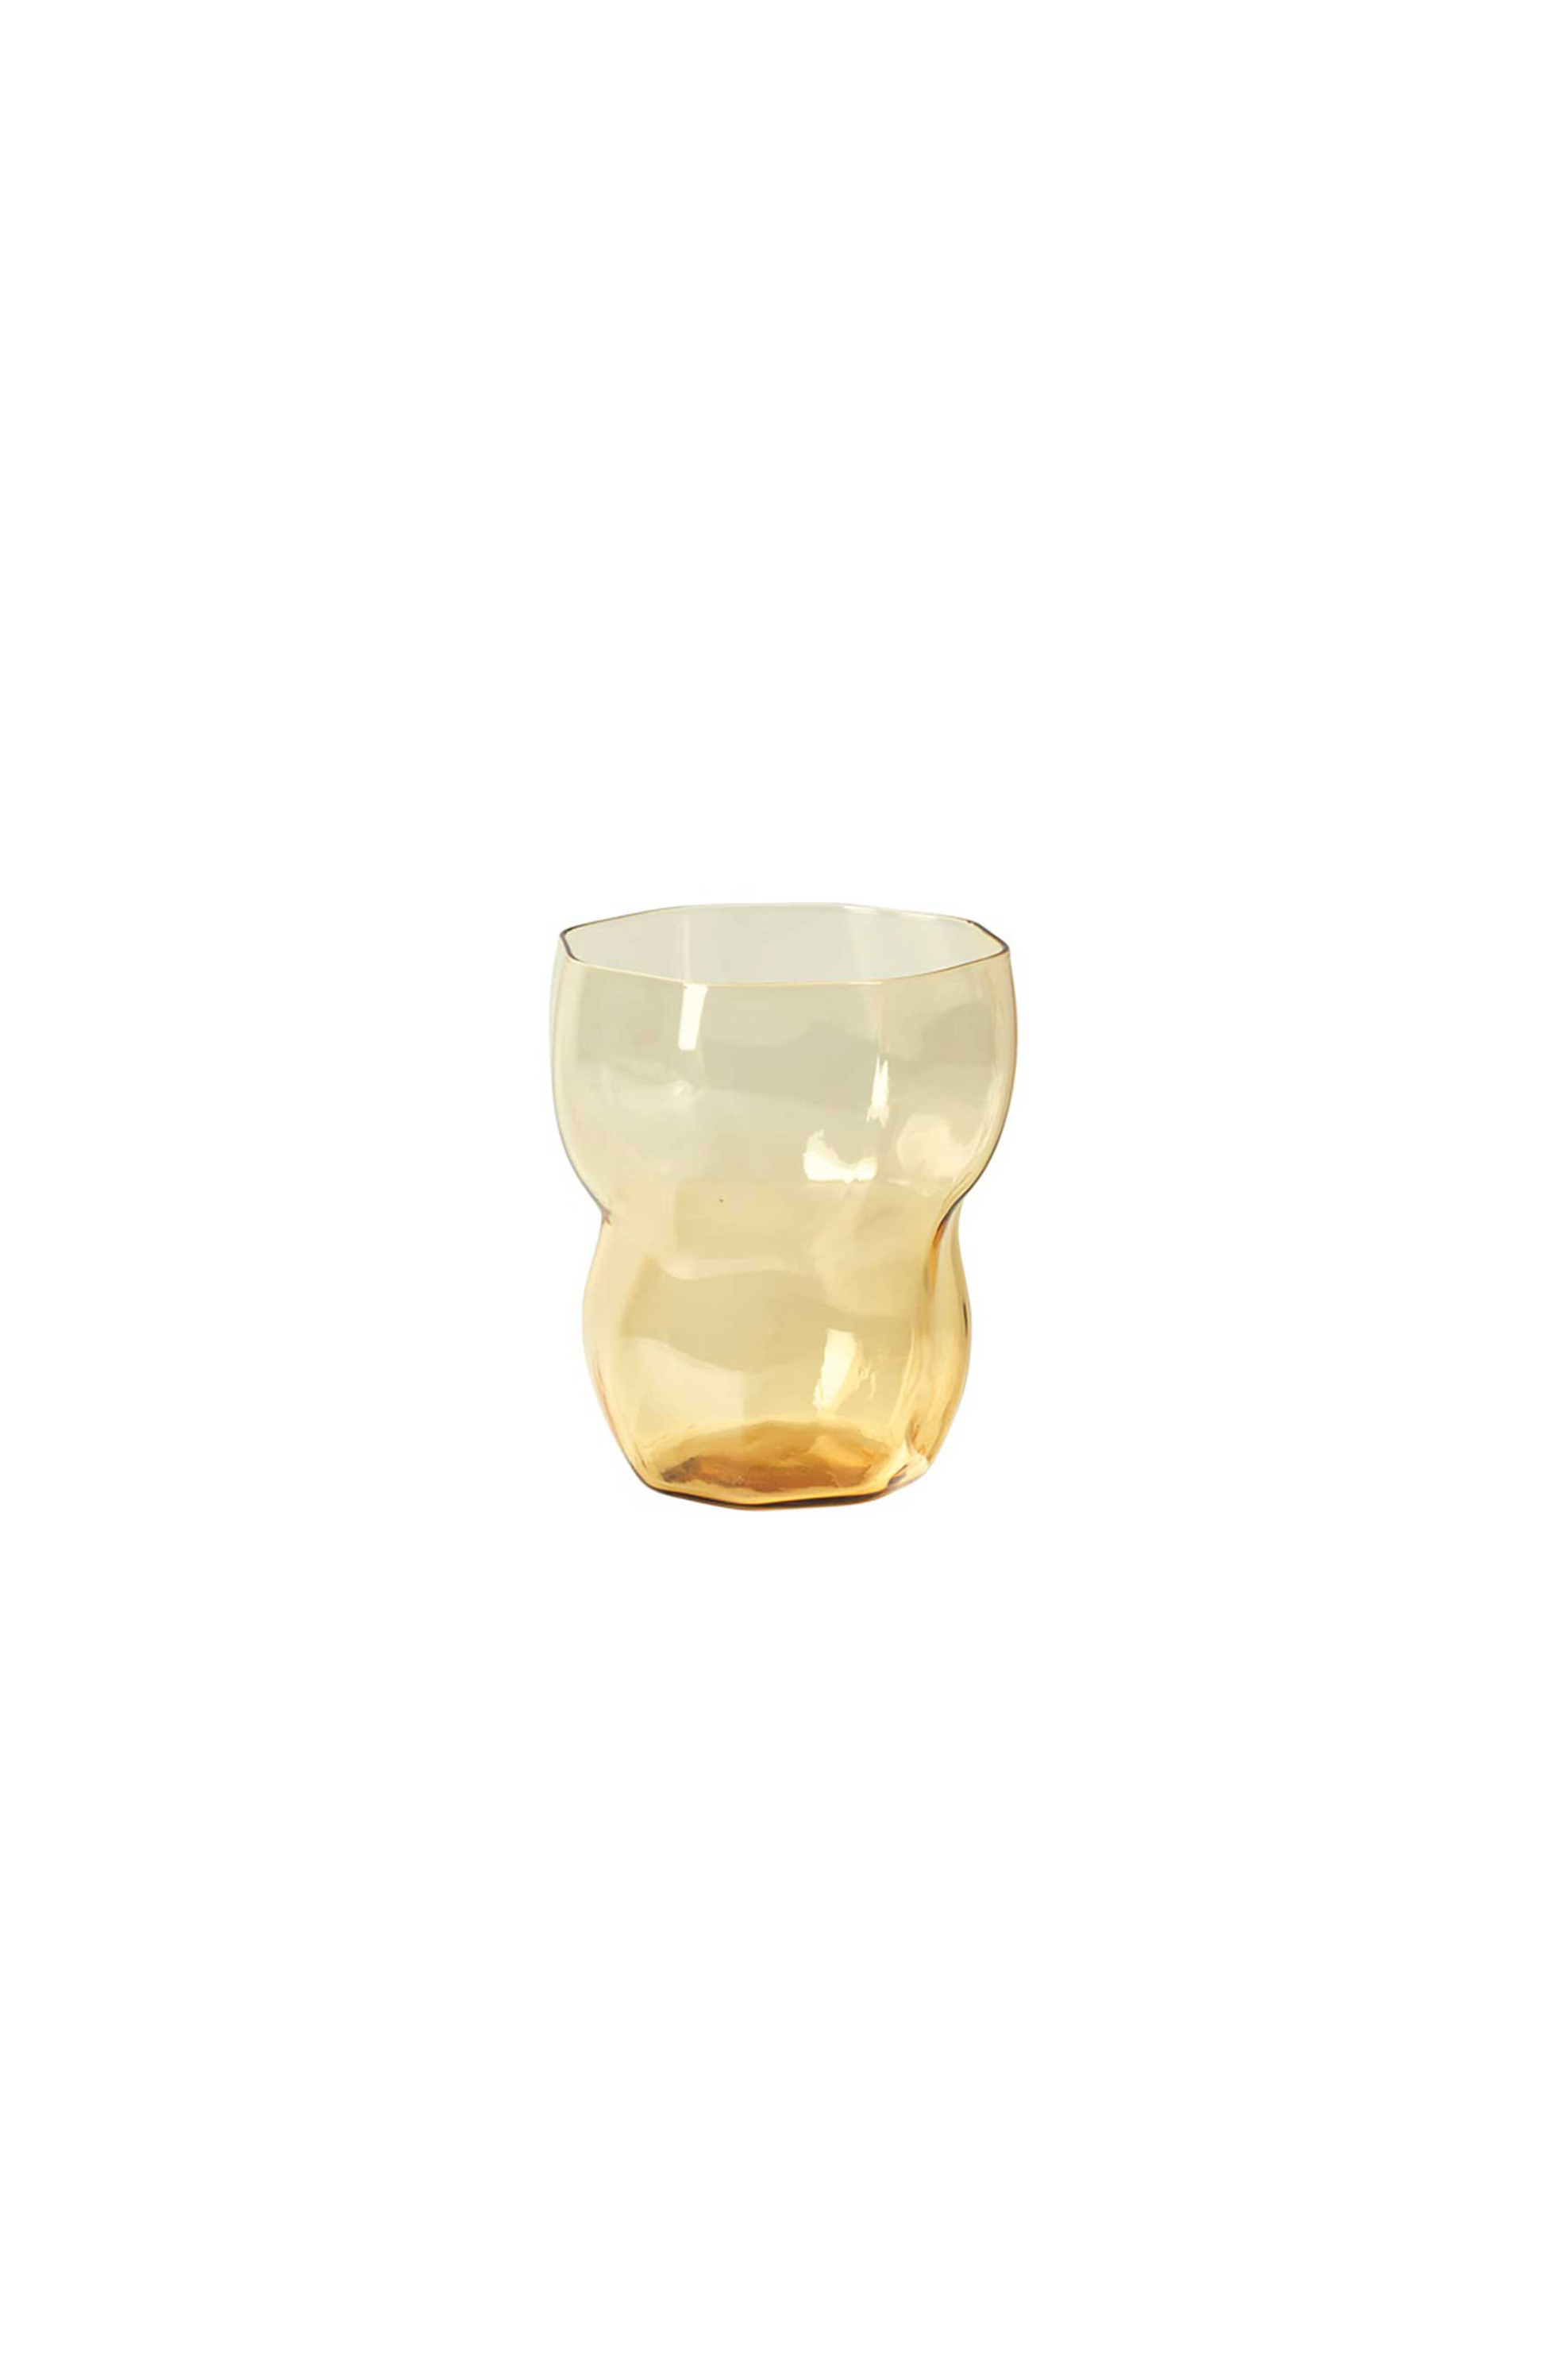 Home > ΚΟΥΖΙΝΑ > Υαλικά > Ποτήρια Broste Copenhagen γυάλινο ποτήρι νερού μονόχρωμο "Limfjord" 8,2 x 9,2 cm - 14496229 Κίτρινο